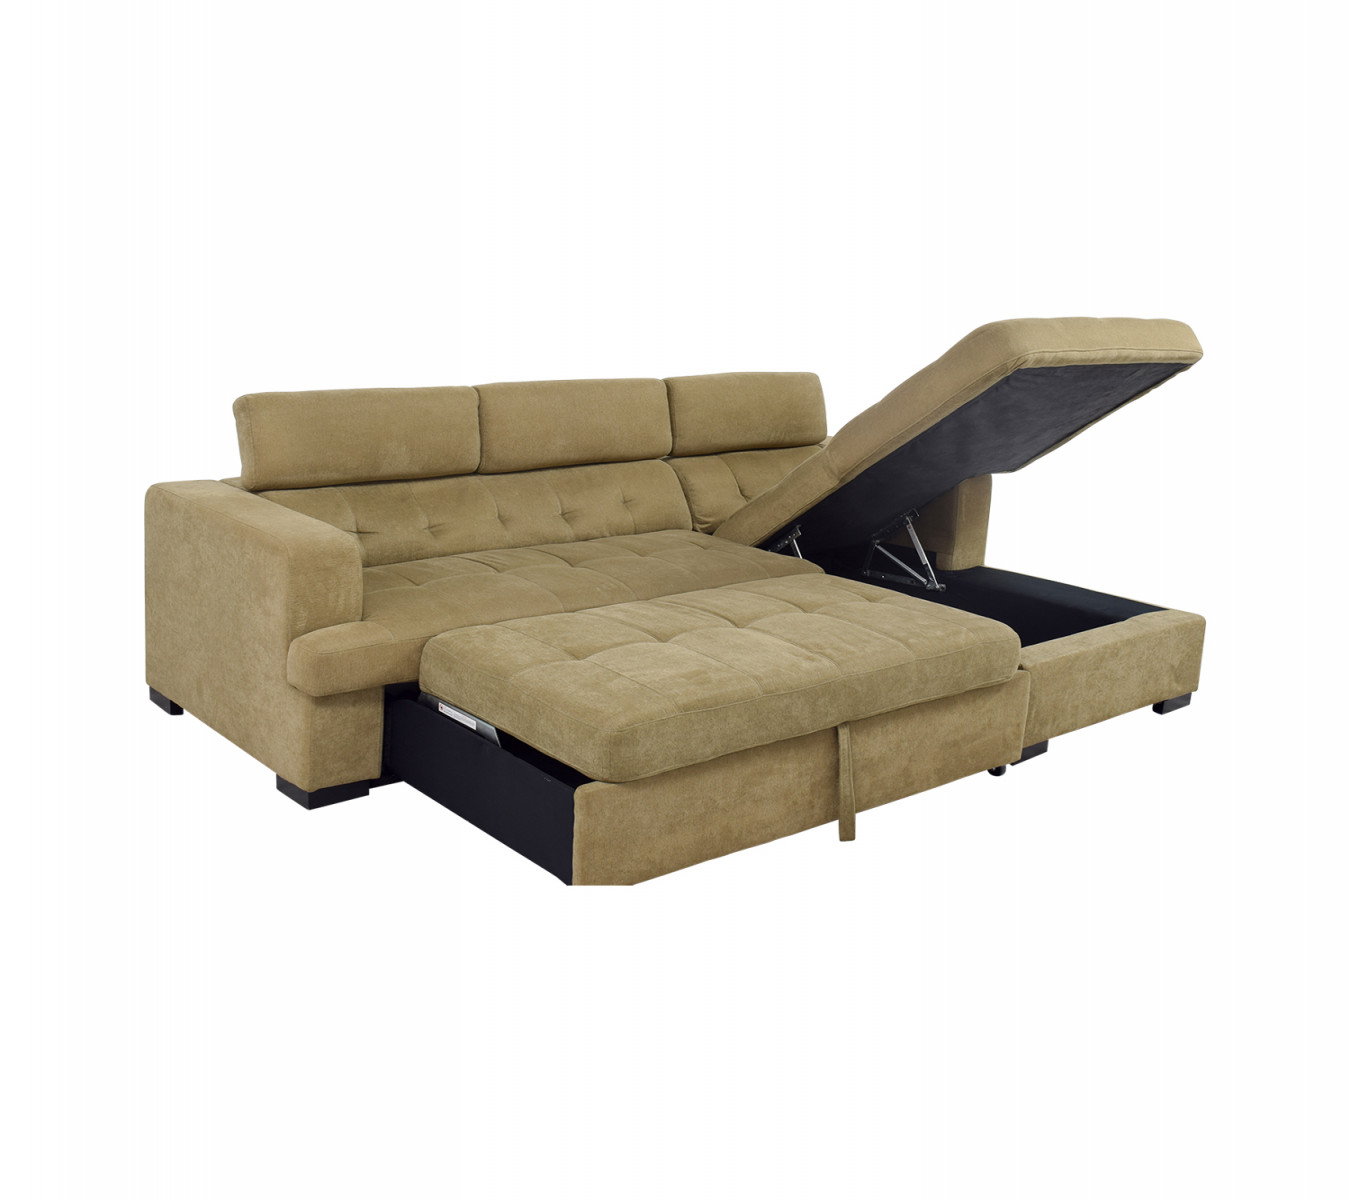 Bob Furniture Sofa Bed